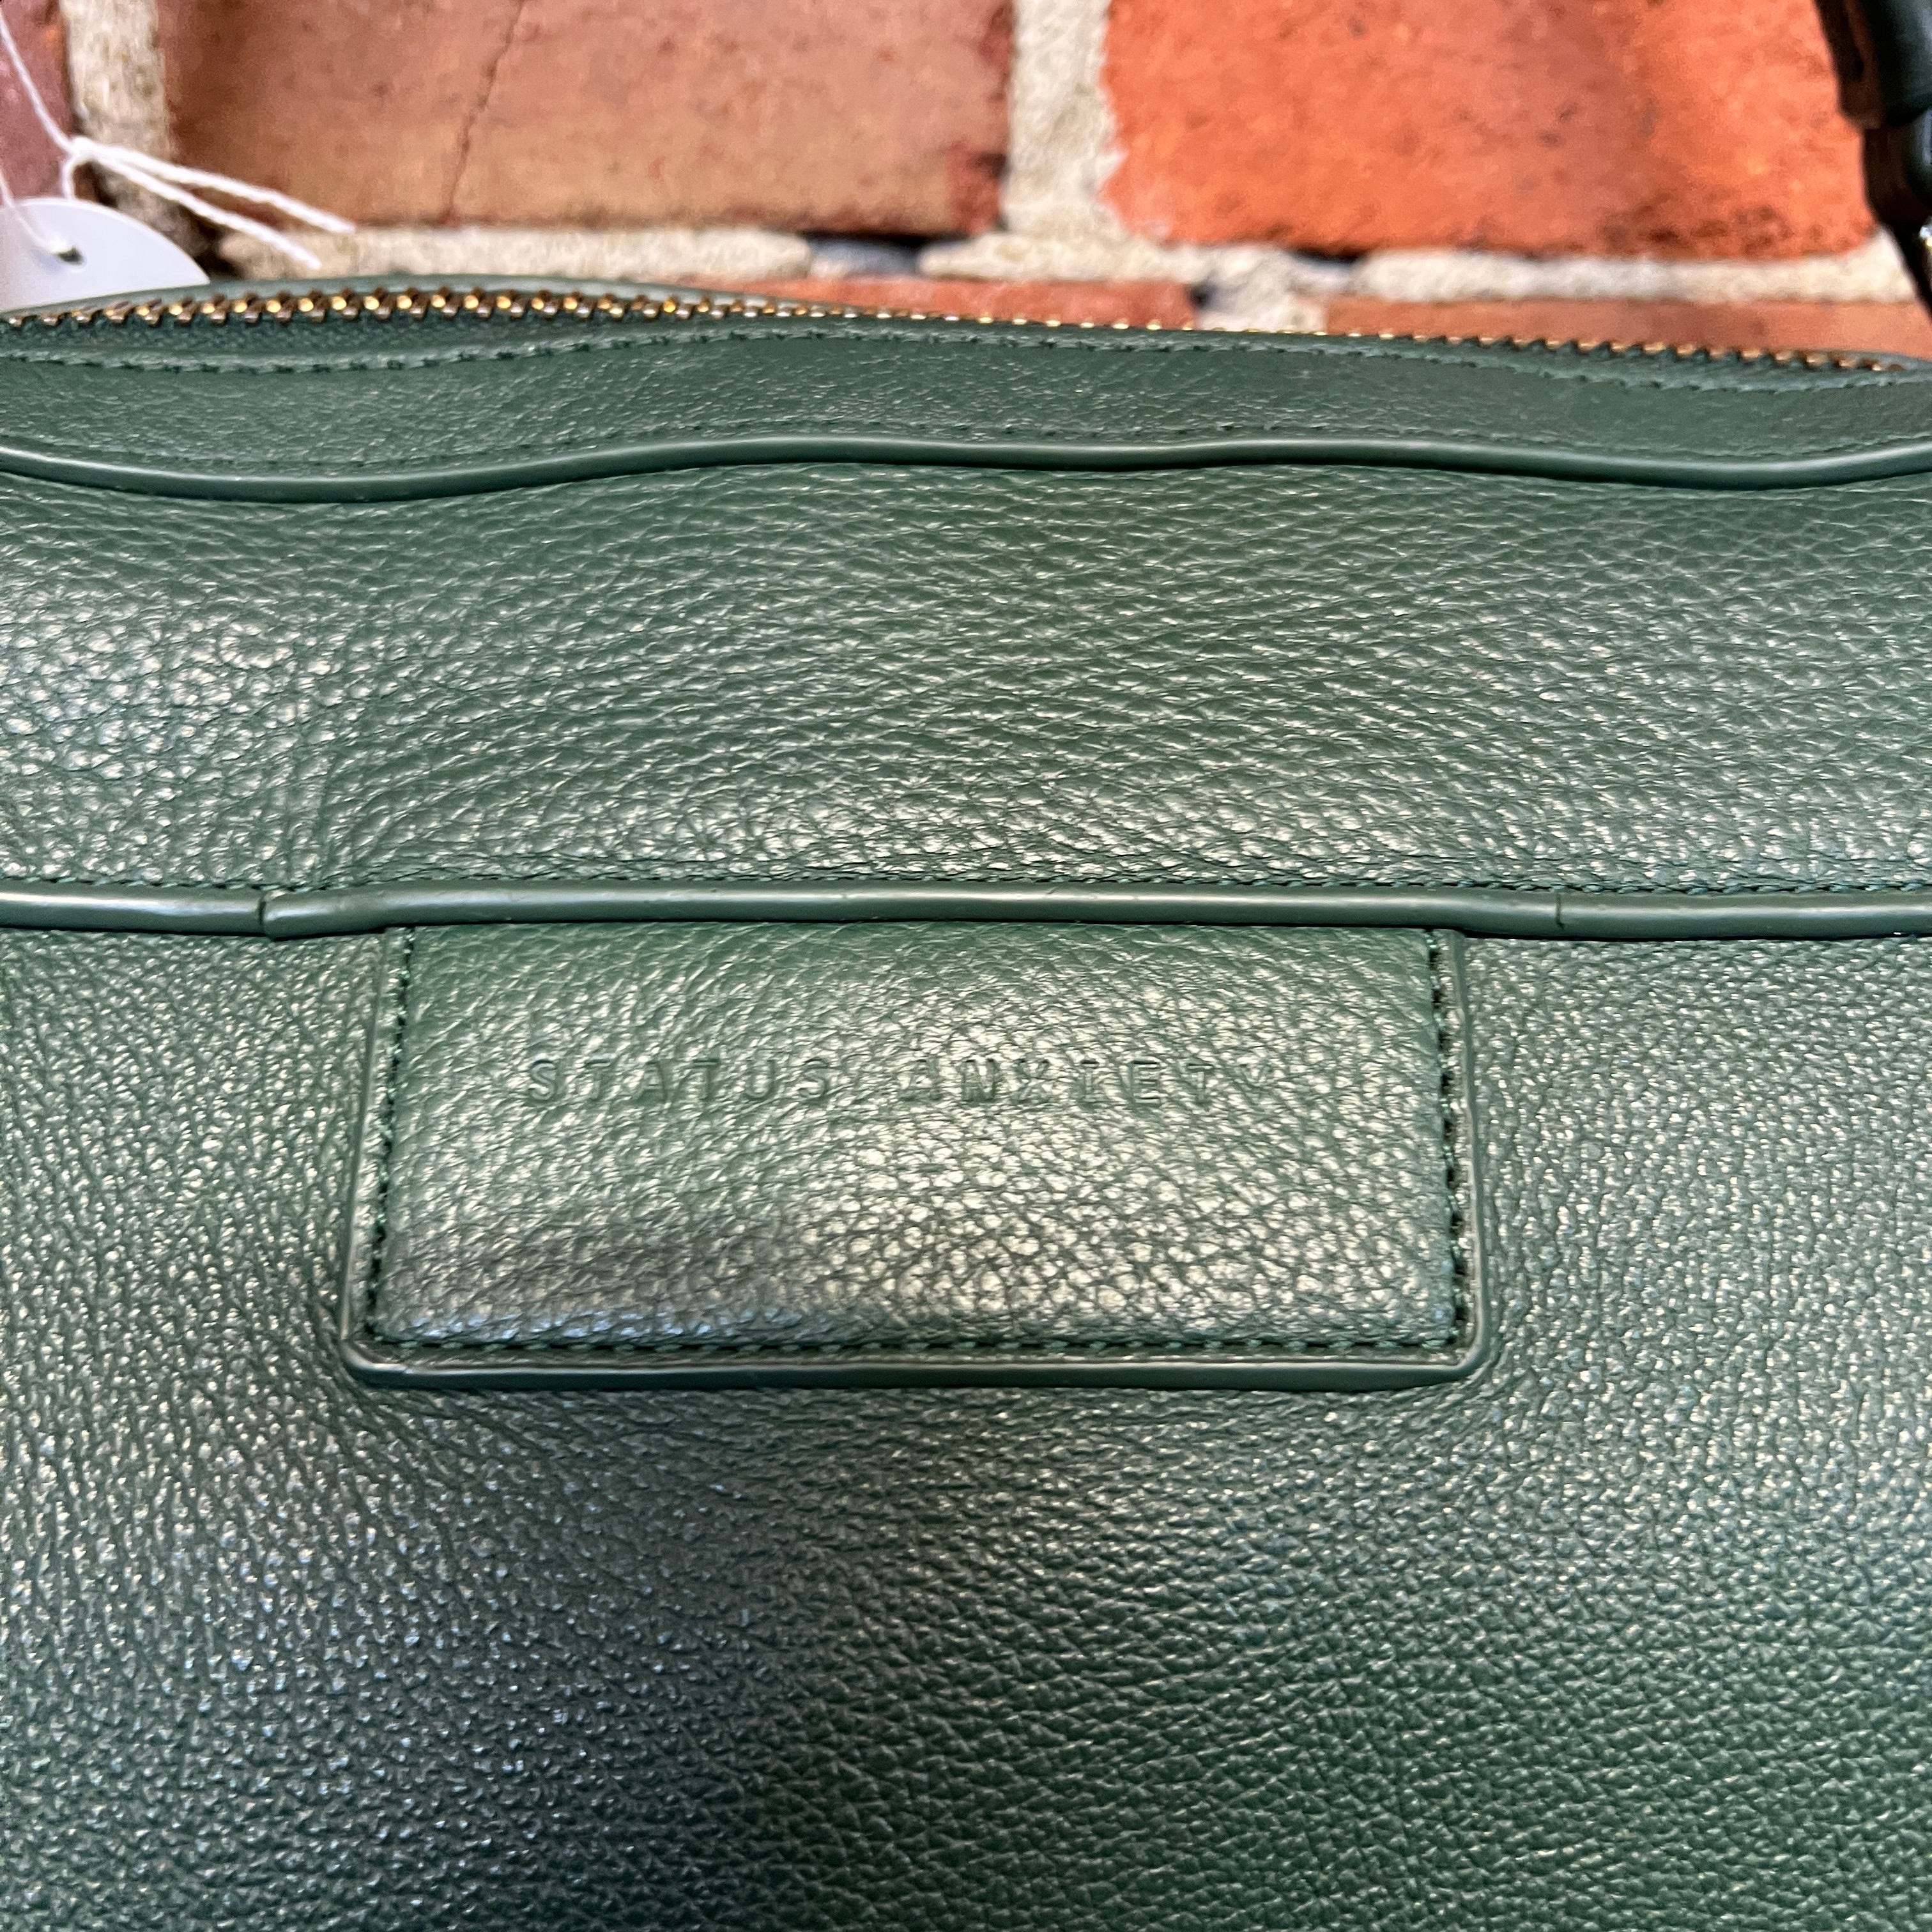 STATUS ANXIETY leather handbag